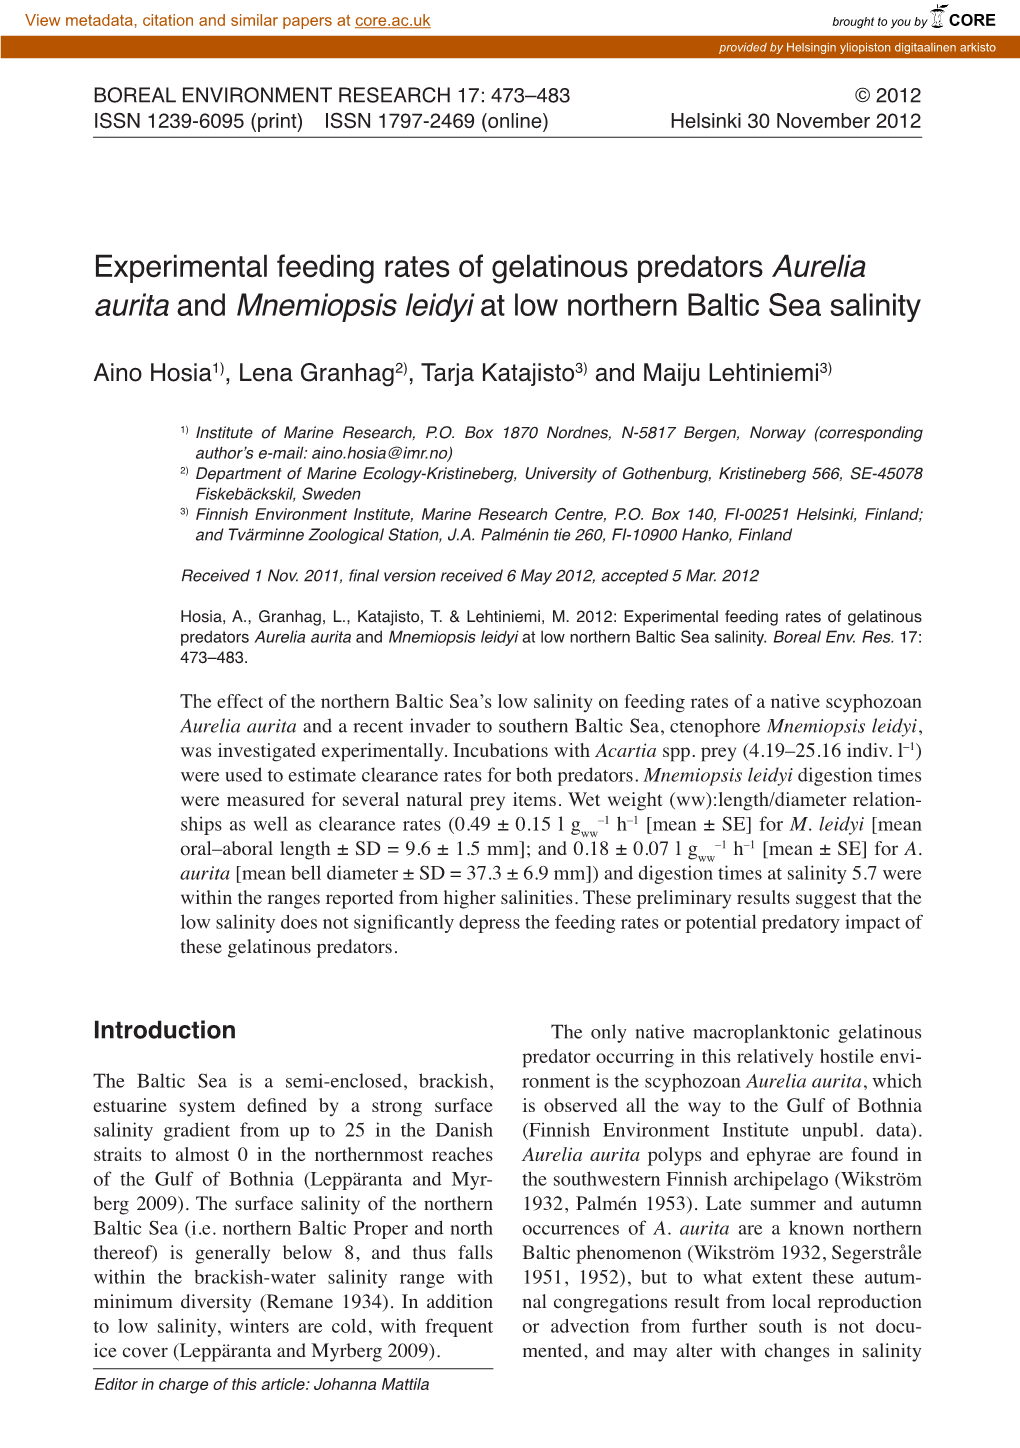 Experimental Feeding Rates of Gelatinous Predators Aurelia Aurita and Mnemiopsis Leidyi at Low Northern Baltic Sea Salinity